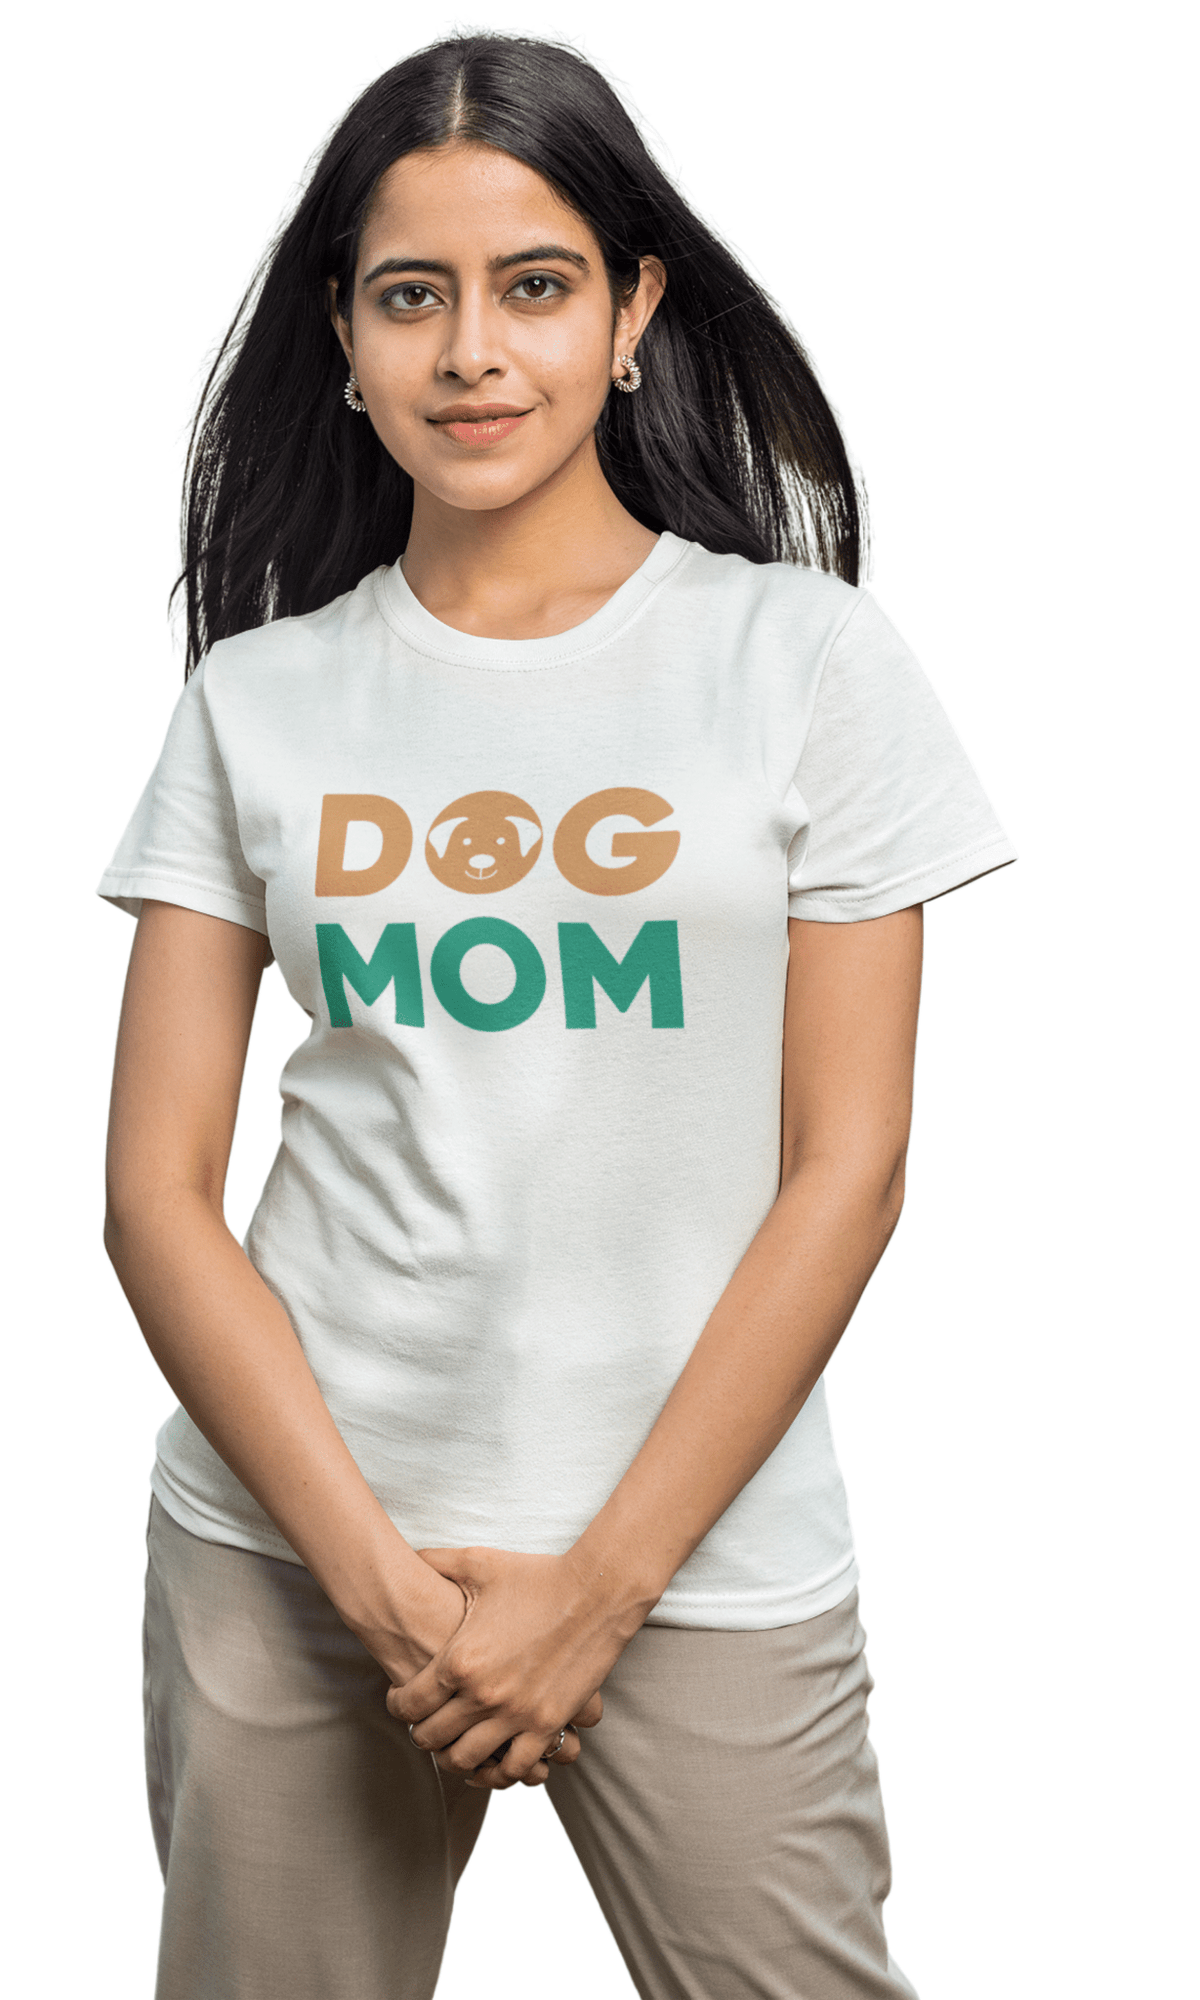 Dog Mom Regular Women's T-Shirt - Hush and Wear